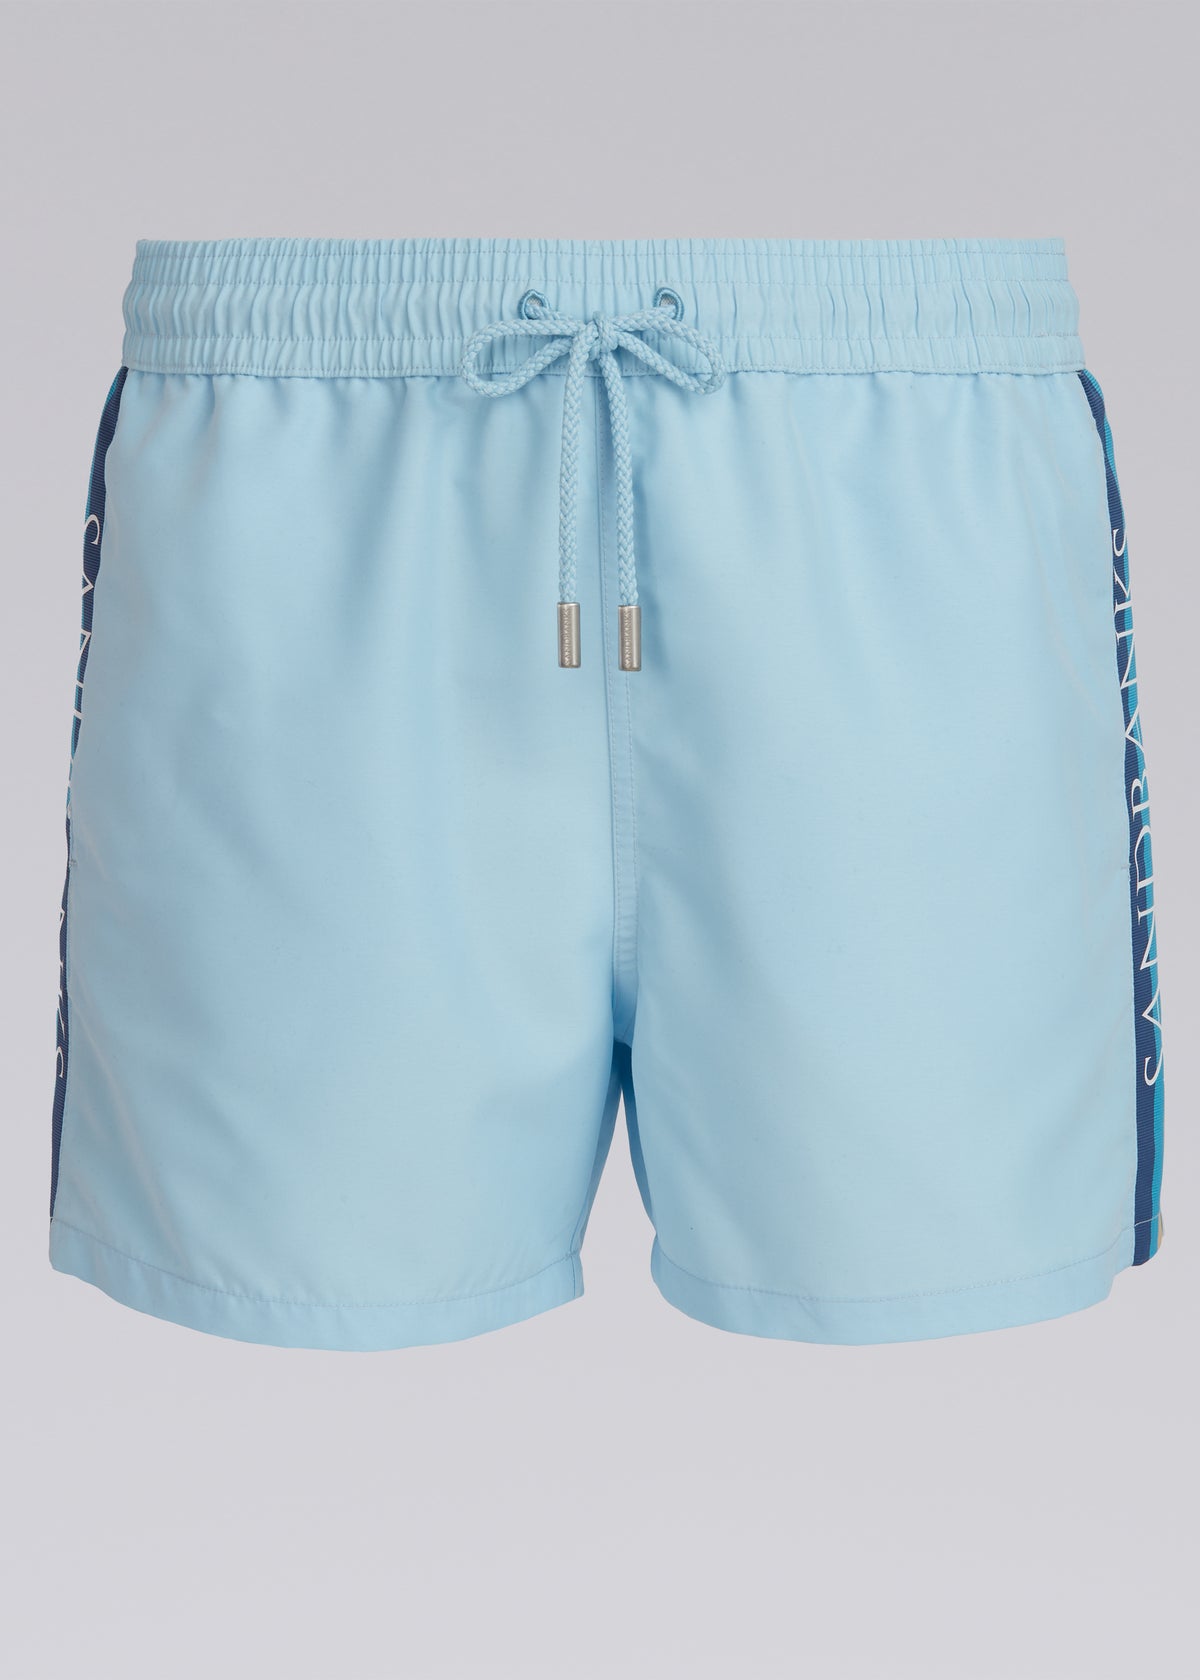 Sandbanks Retro Swim Shorts - Crystal Blue - Sandbanks